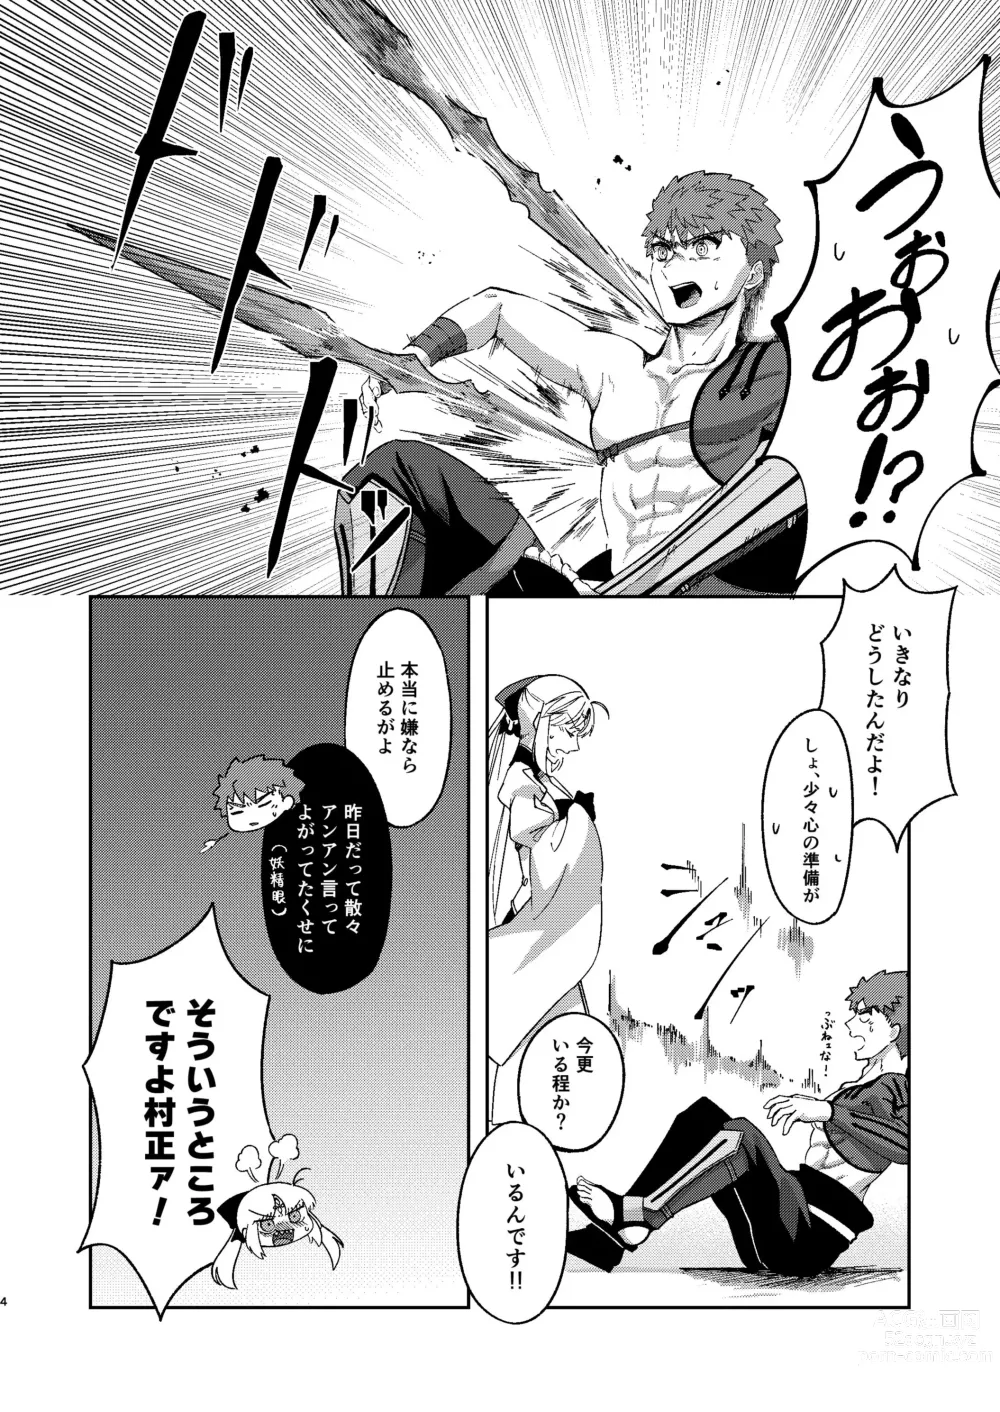 Page 4 of doujinshi Oazuke!